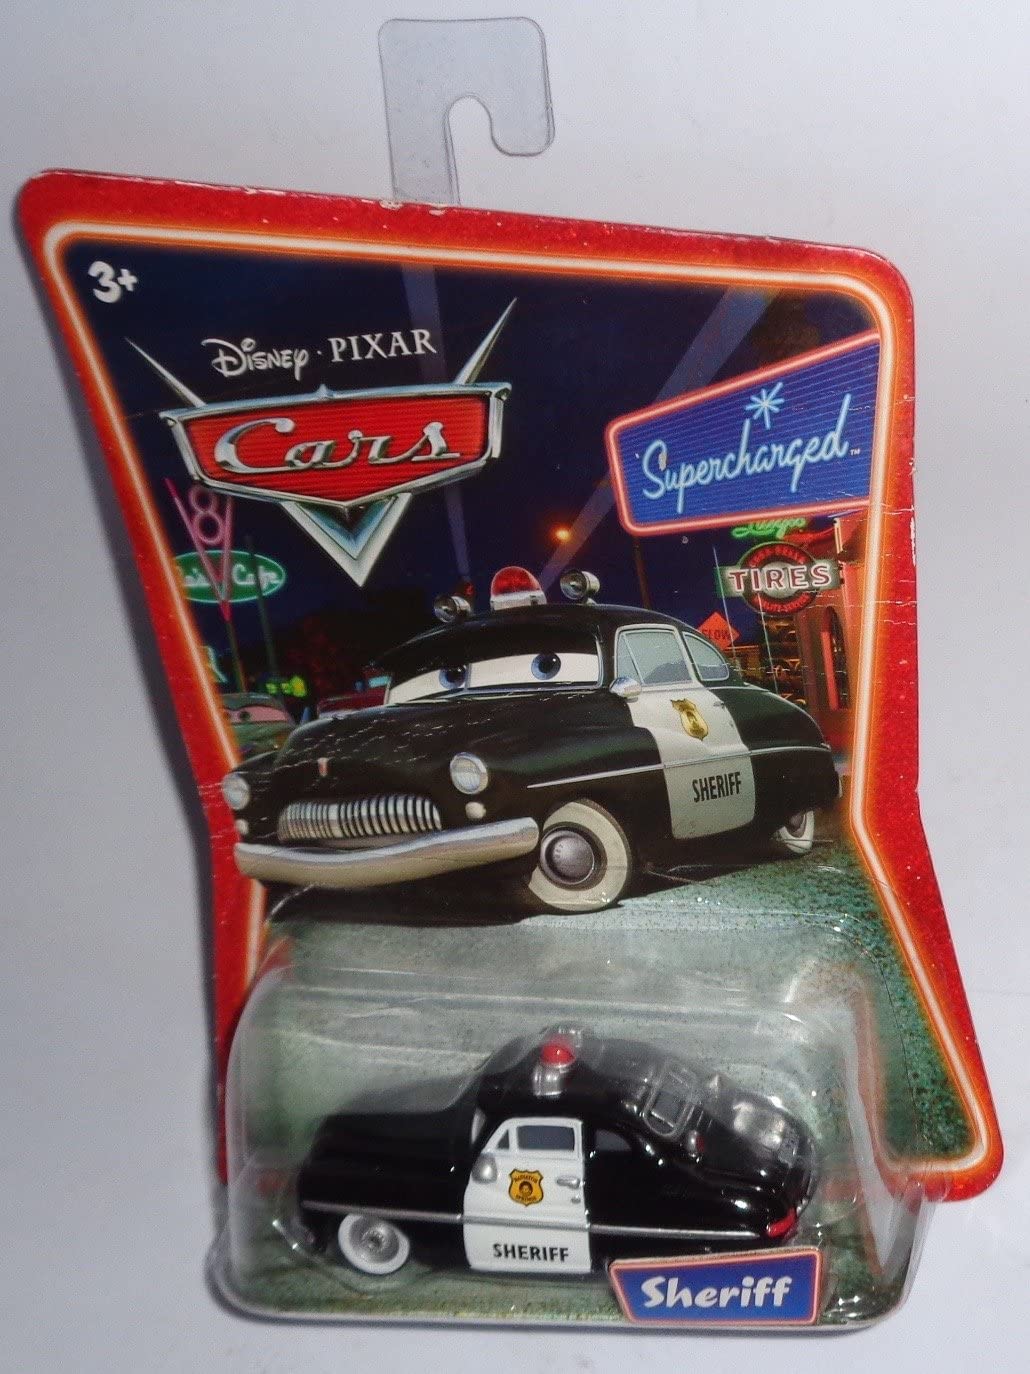 Disney Pixar Cars Movie Supercharged Sheriff and Mcqueen, Dinoco, Radiator Springs